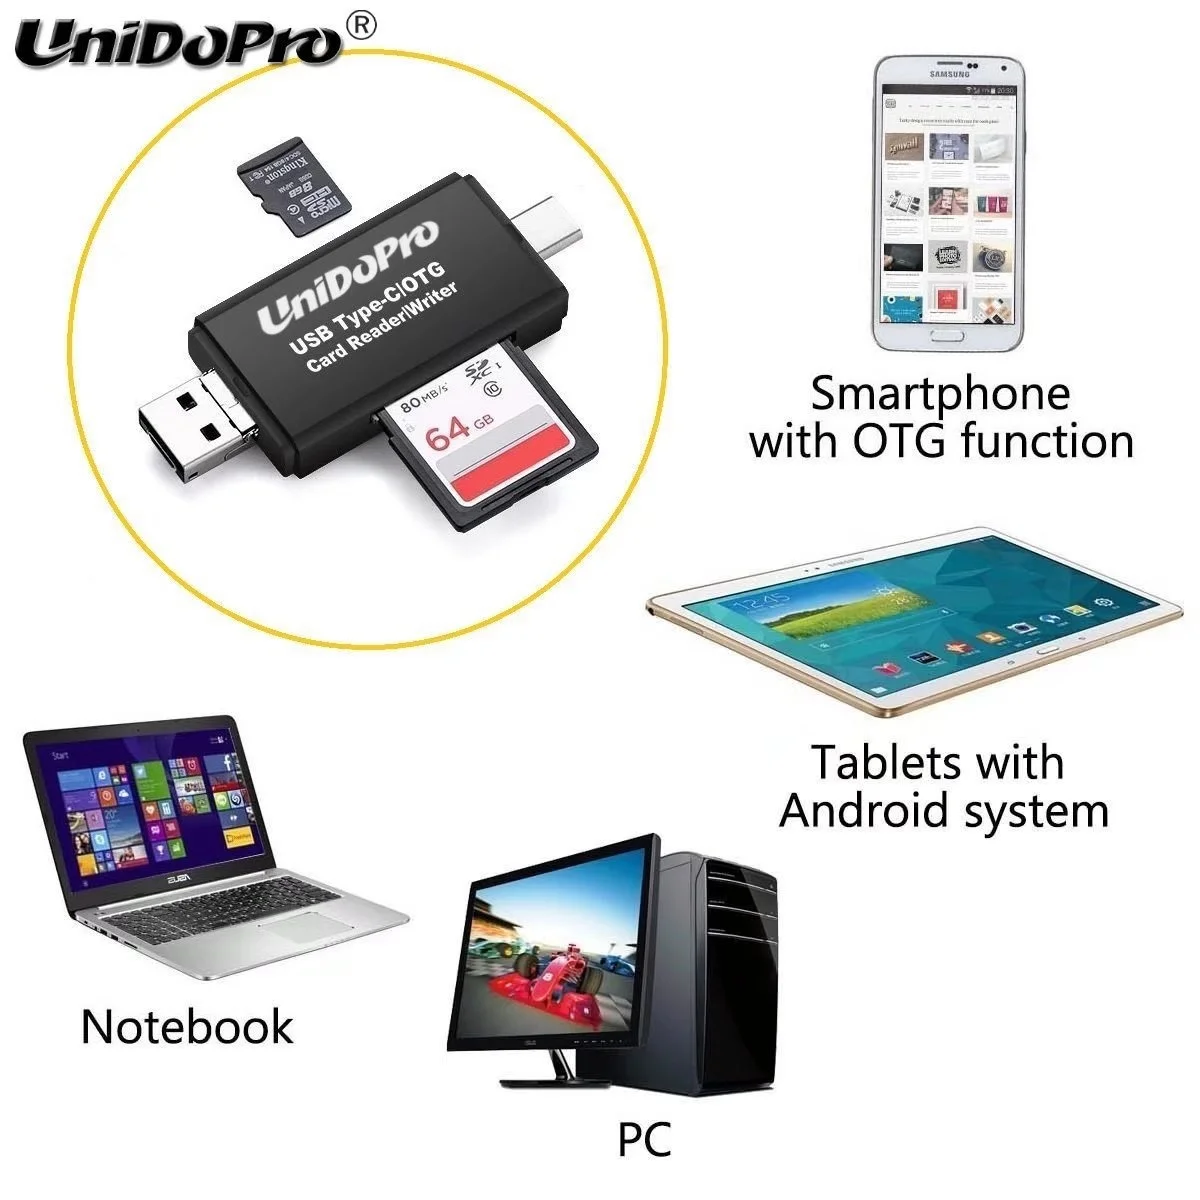 Kortlæser Type C OTG USB 2.0 Adapter Mand & Mikro-USB-Mand, SD / Mikro SD Carte Læser til Huawei P30 P20 P10 P9 Mate 30 20